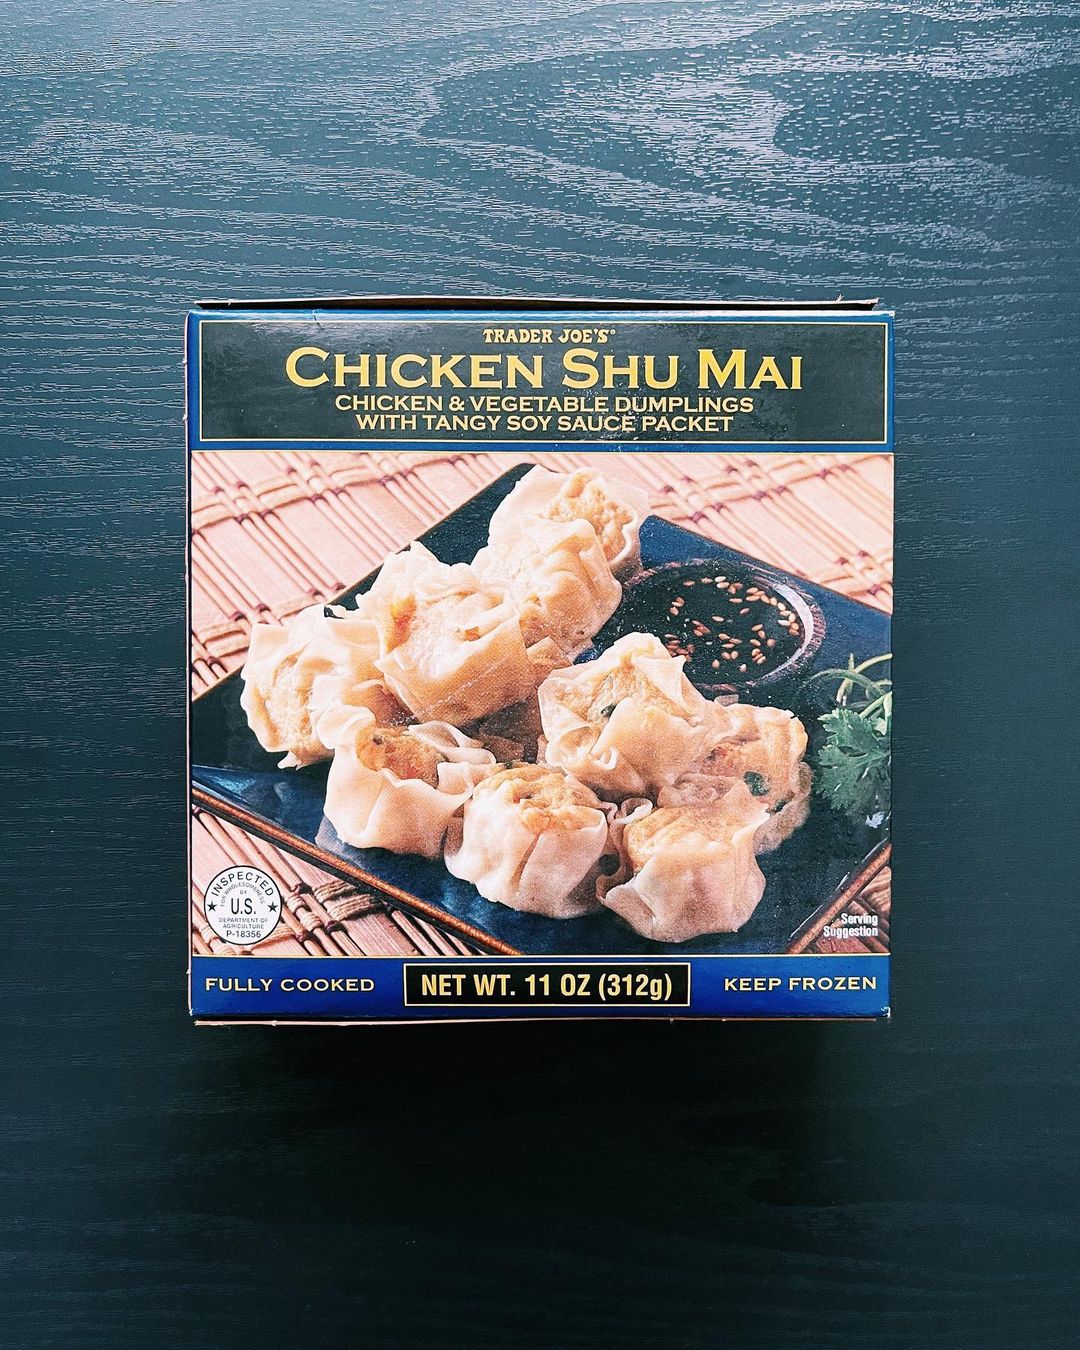 https://traderjoes.reviews/wp-content/uploads/2021/11/Chicken-Shu-Mai-510-These-chicken-s.jpg